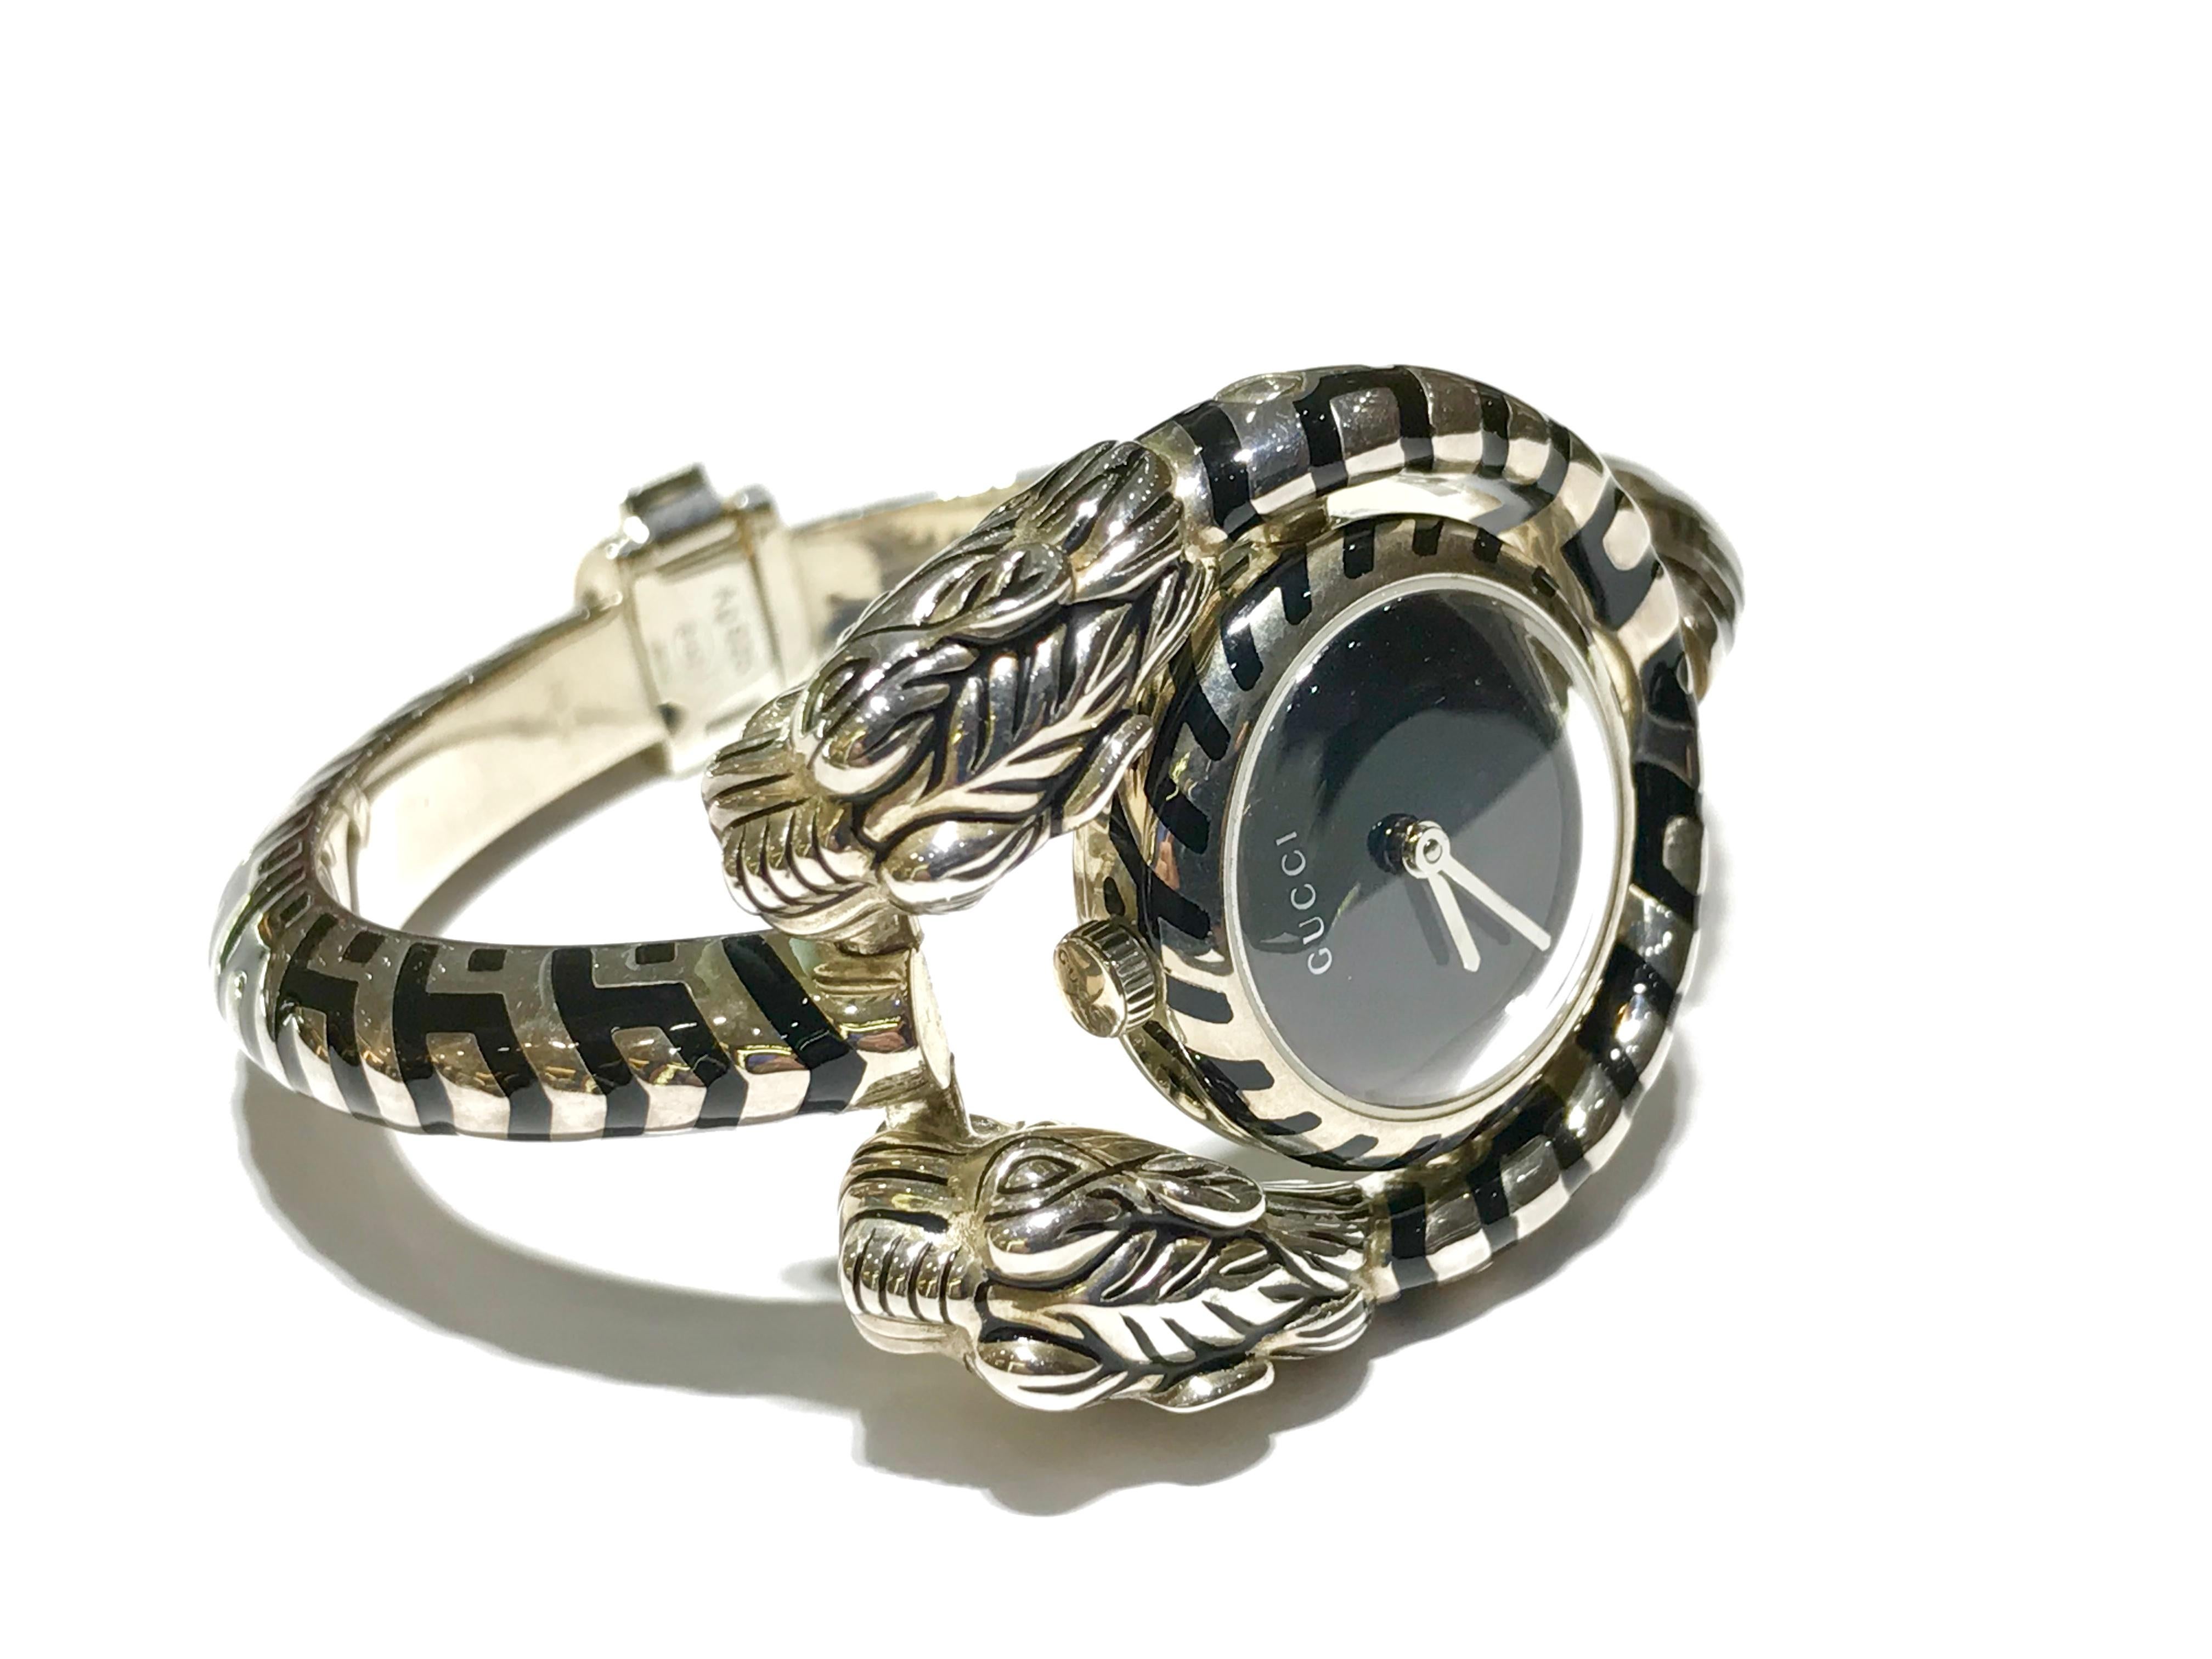 GUCCI YA149501 Dionysus silver watch.
 Gucci Greek God Dionysus Black MOP Tiger Heads Women's Watch
 Quartz Black dial
SILVER